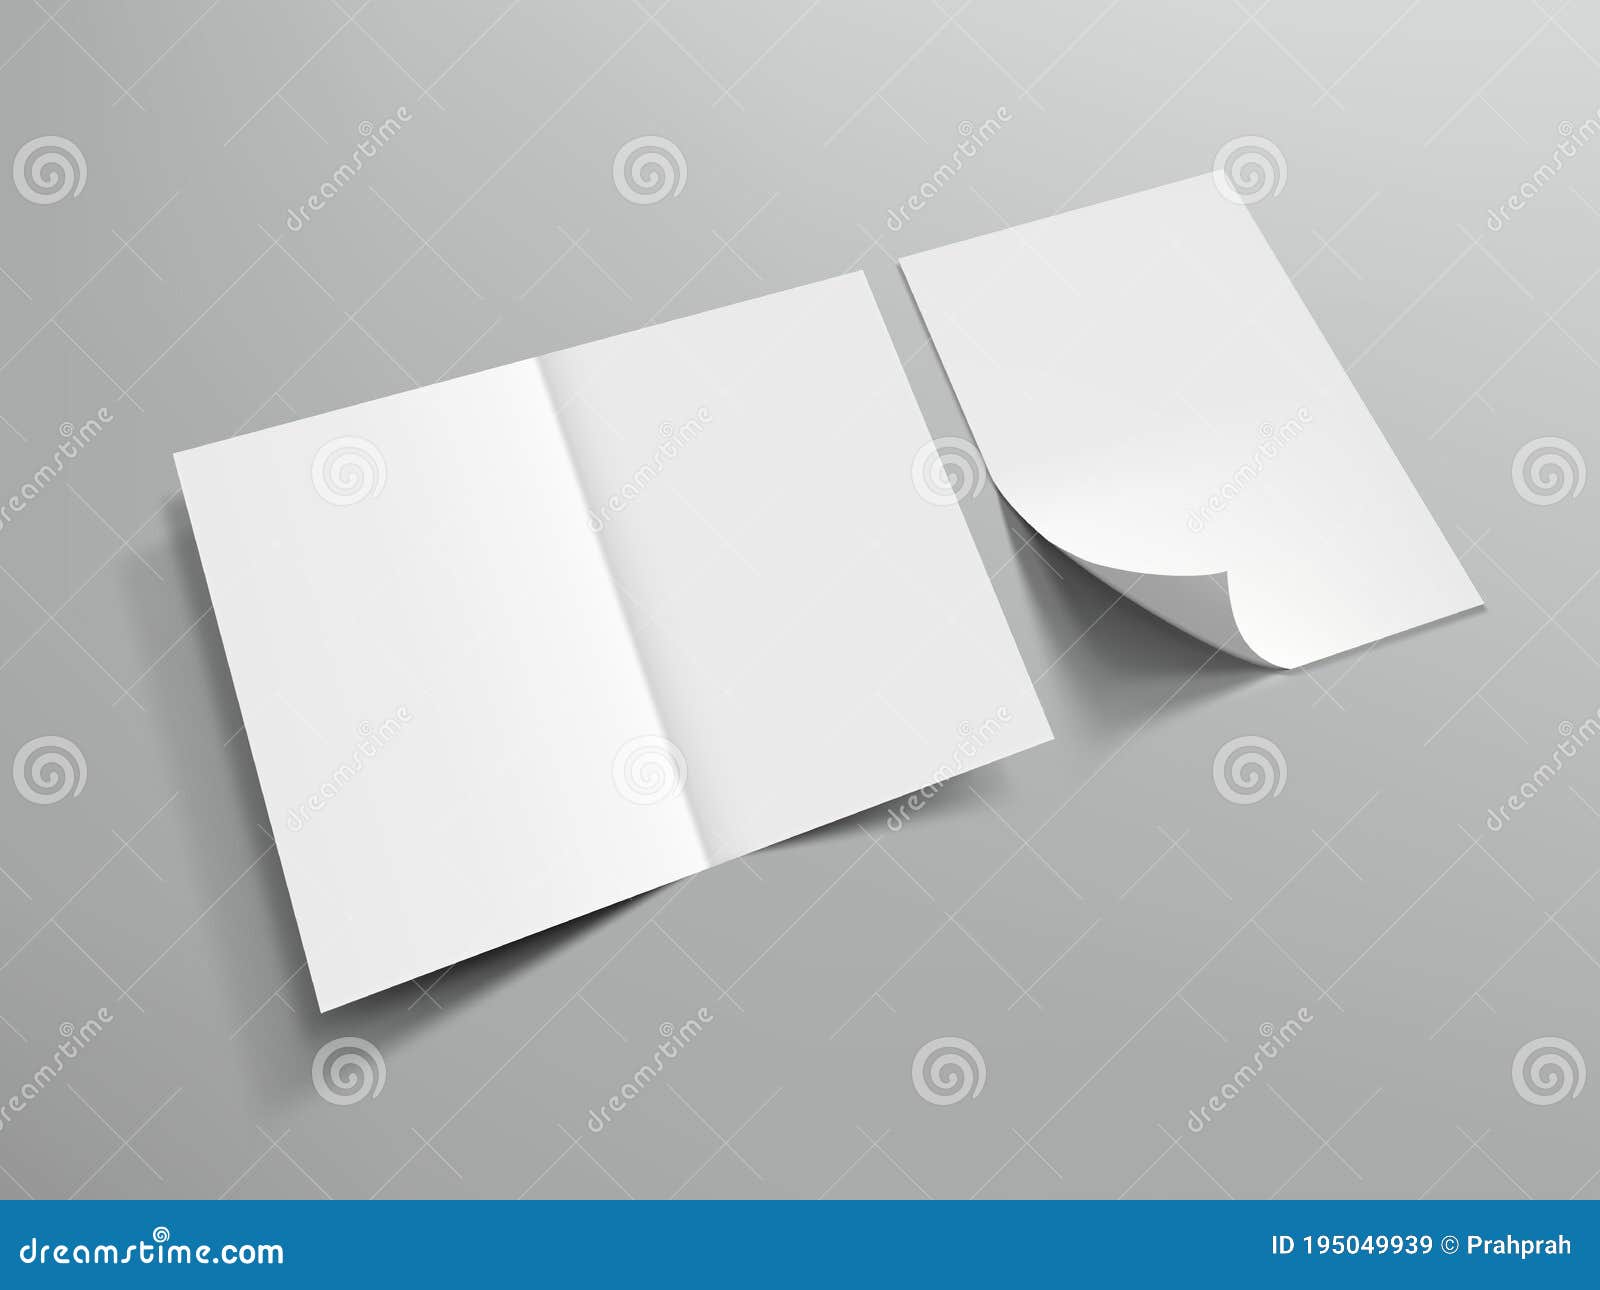 Blank Half Fold Brochure Template For Your Design Stock Illustration Illustration Of Catalog Cover 195049939